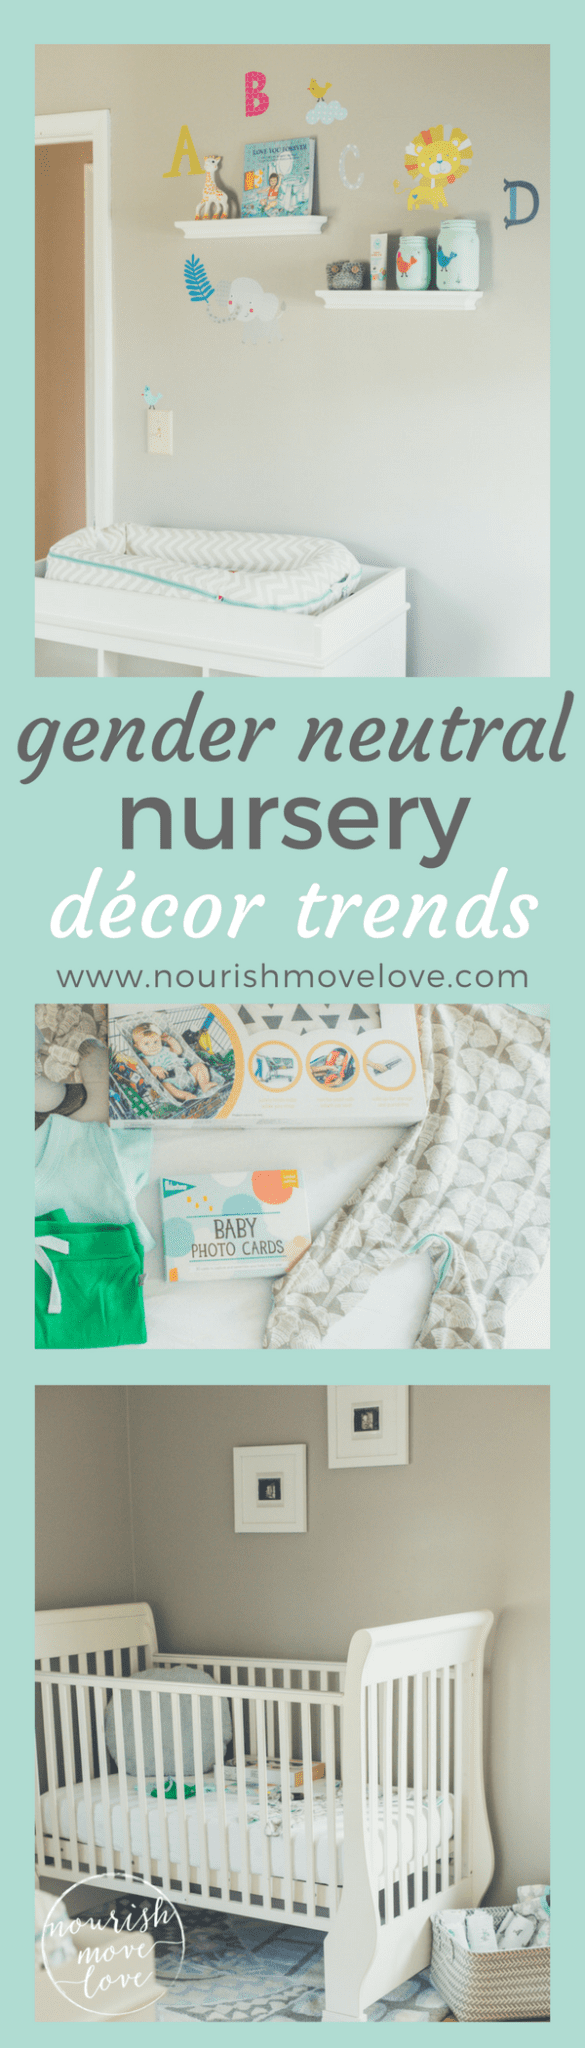 Gender Neutral Nursery Decor Trends | www.nourishmovelove.com